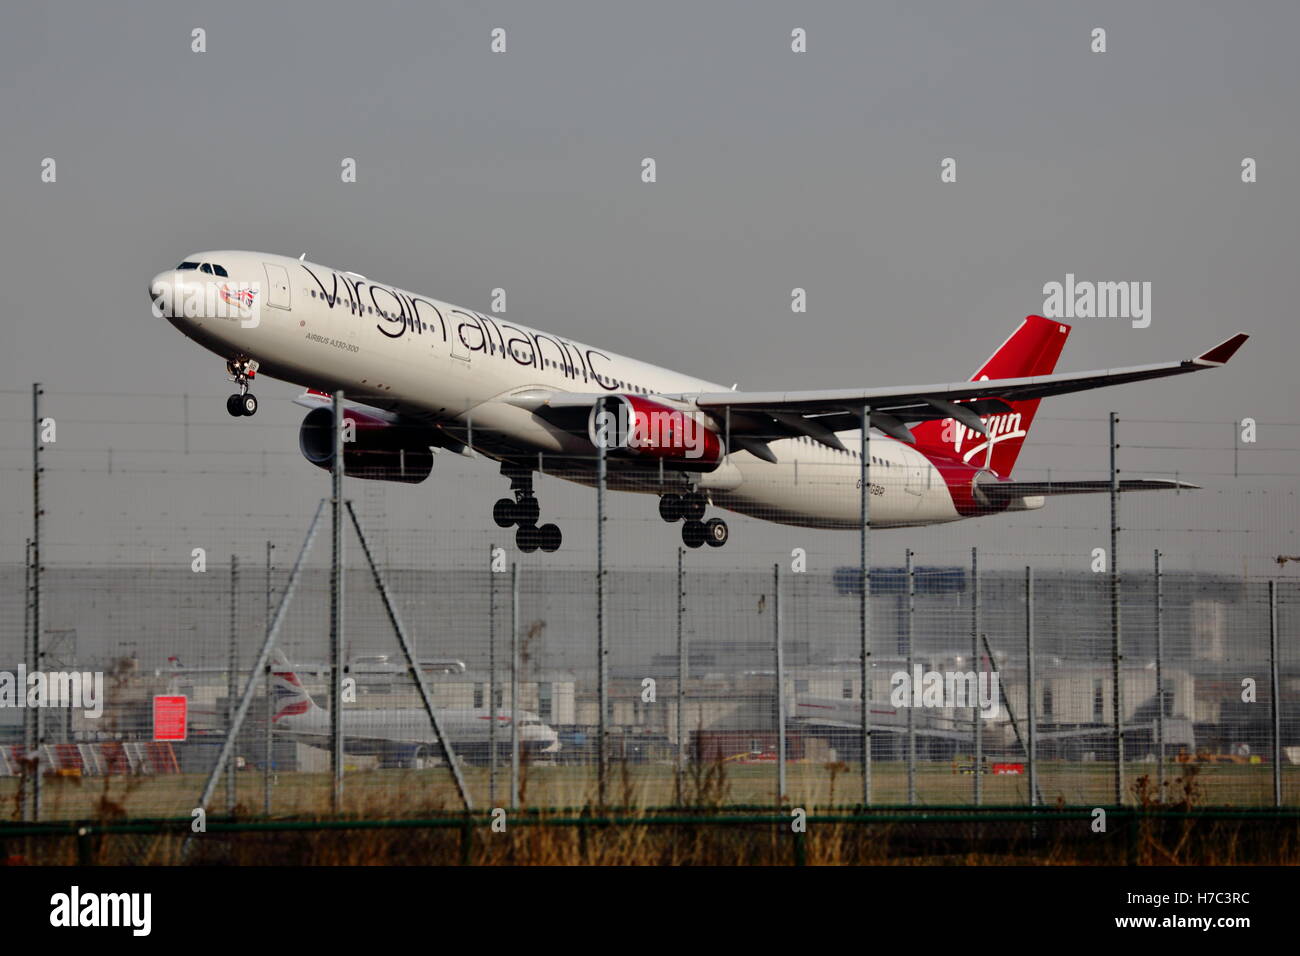 Virgin Atlantic Airbus 330-300 G-VGBR en partant de l'aéroport Heathrow de Londres, UK Banque D'Images